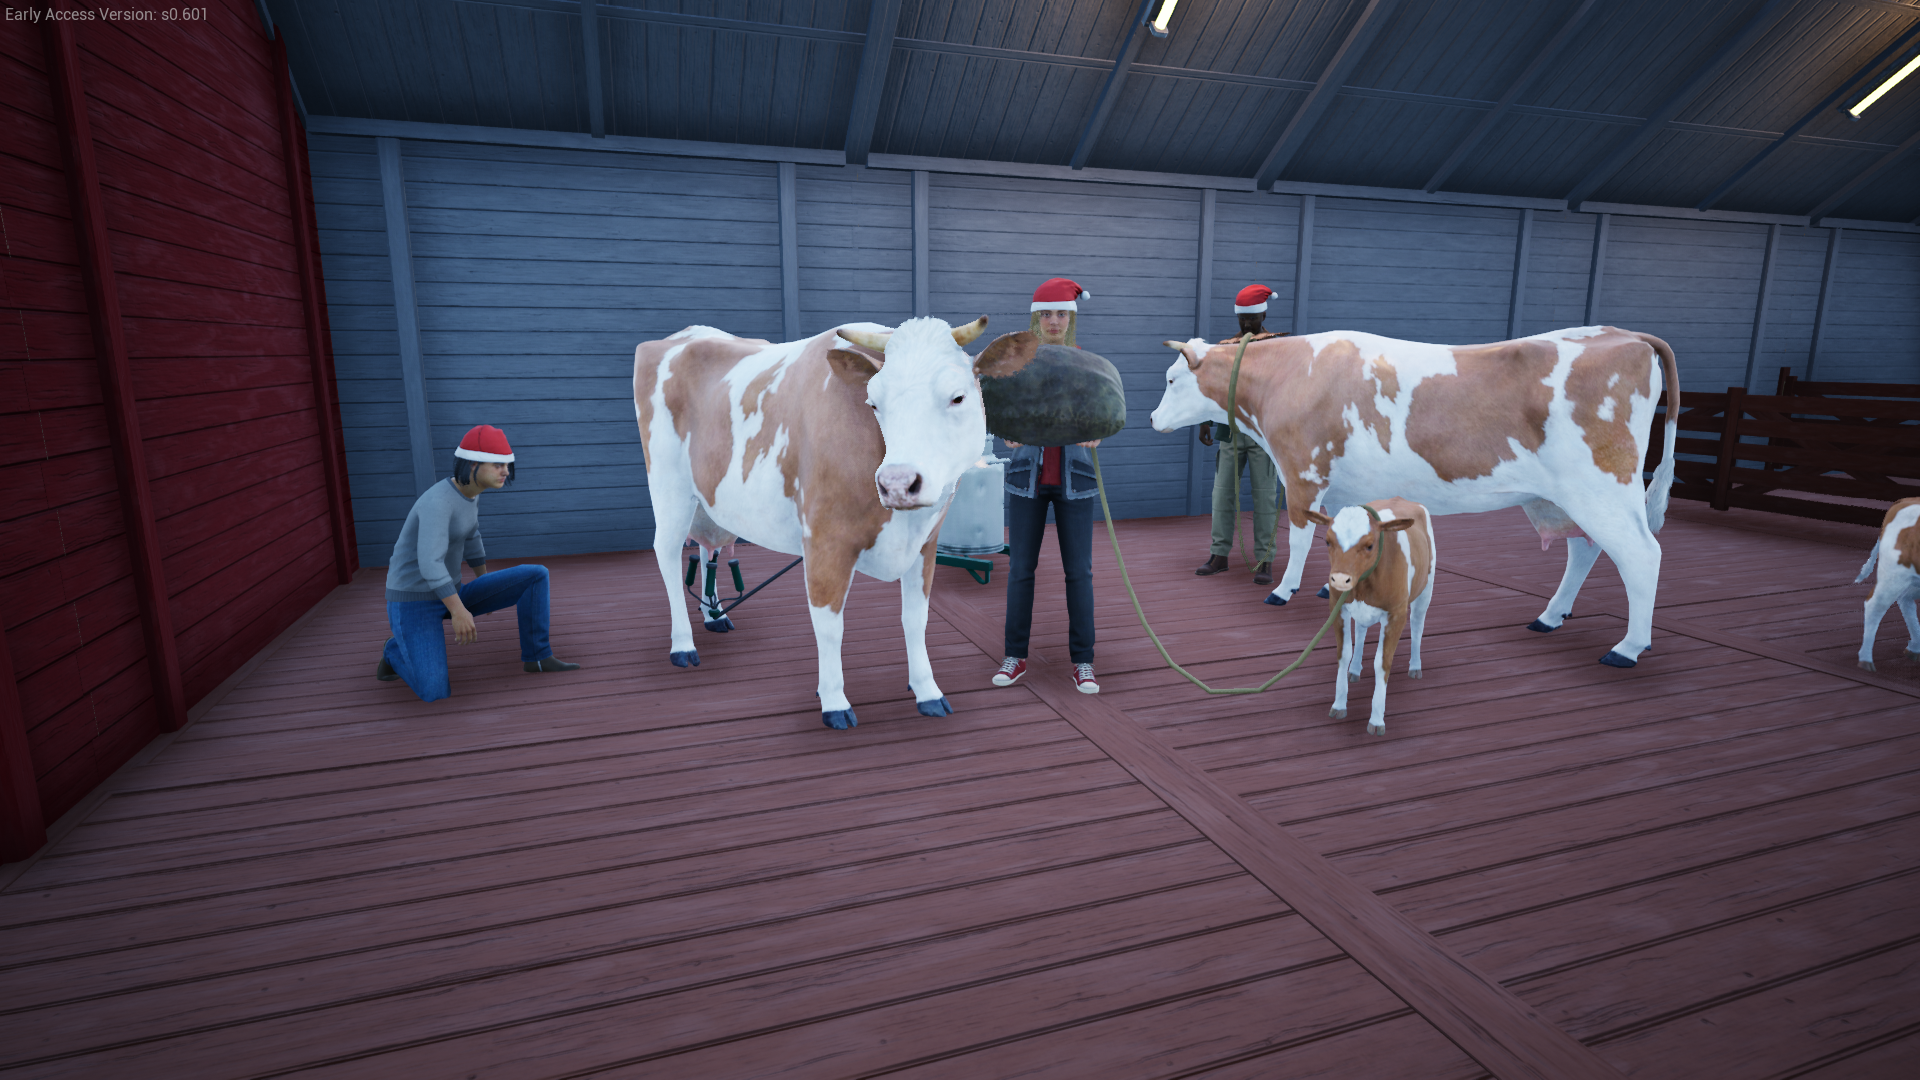 Master Dairy Cow Skills in Ranch Simulator 